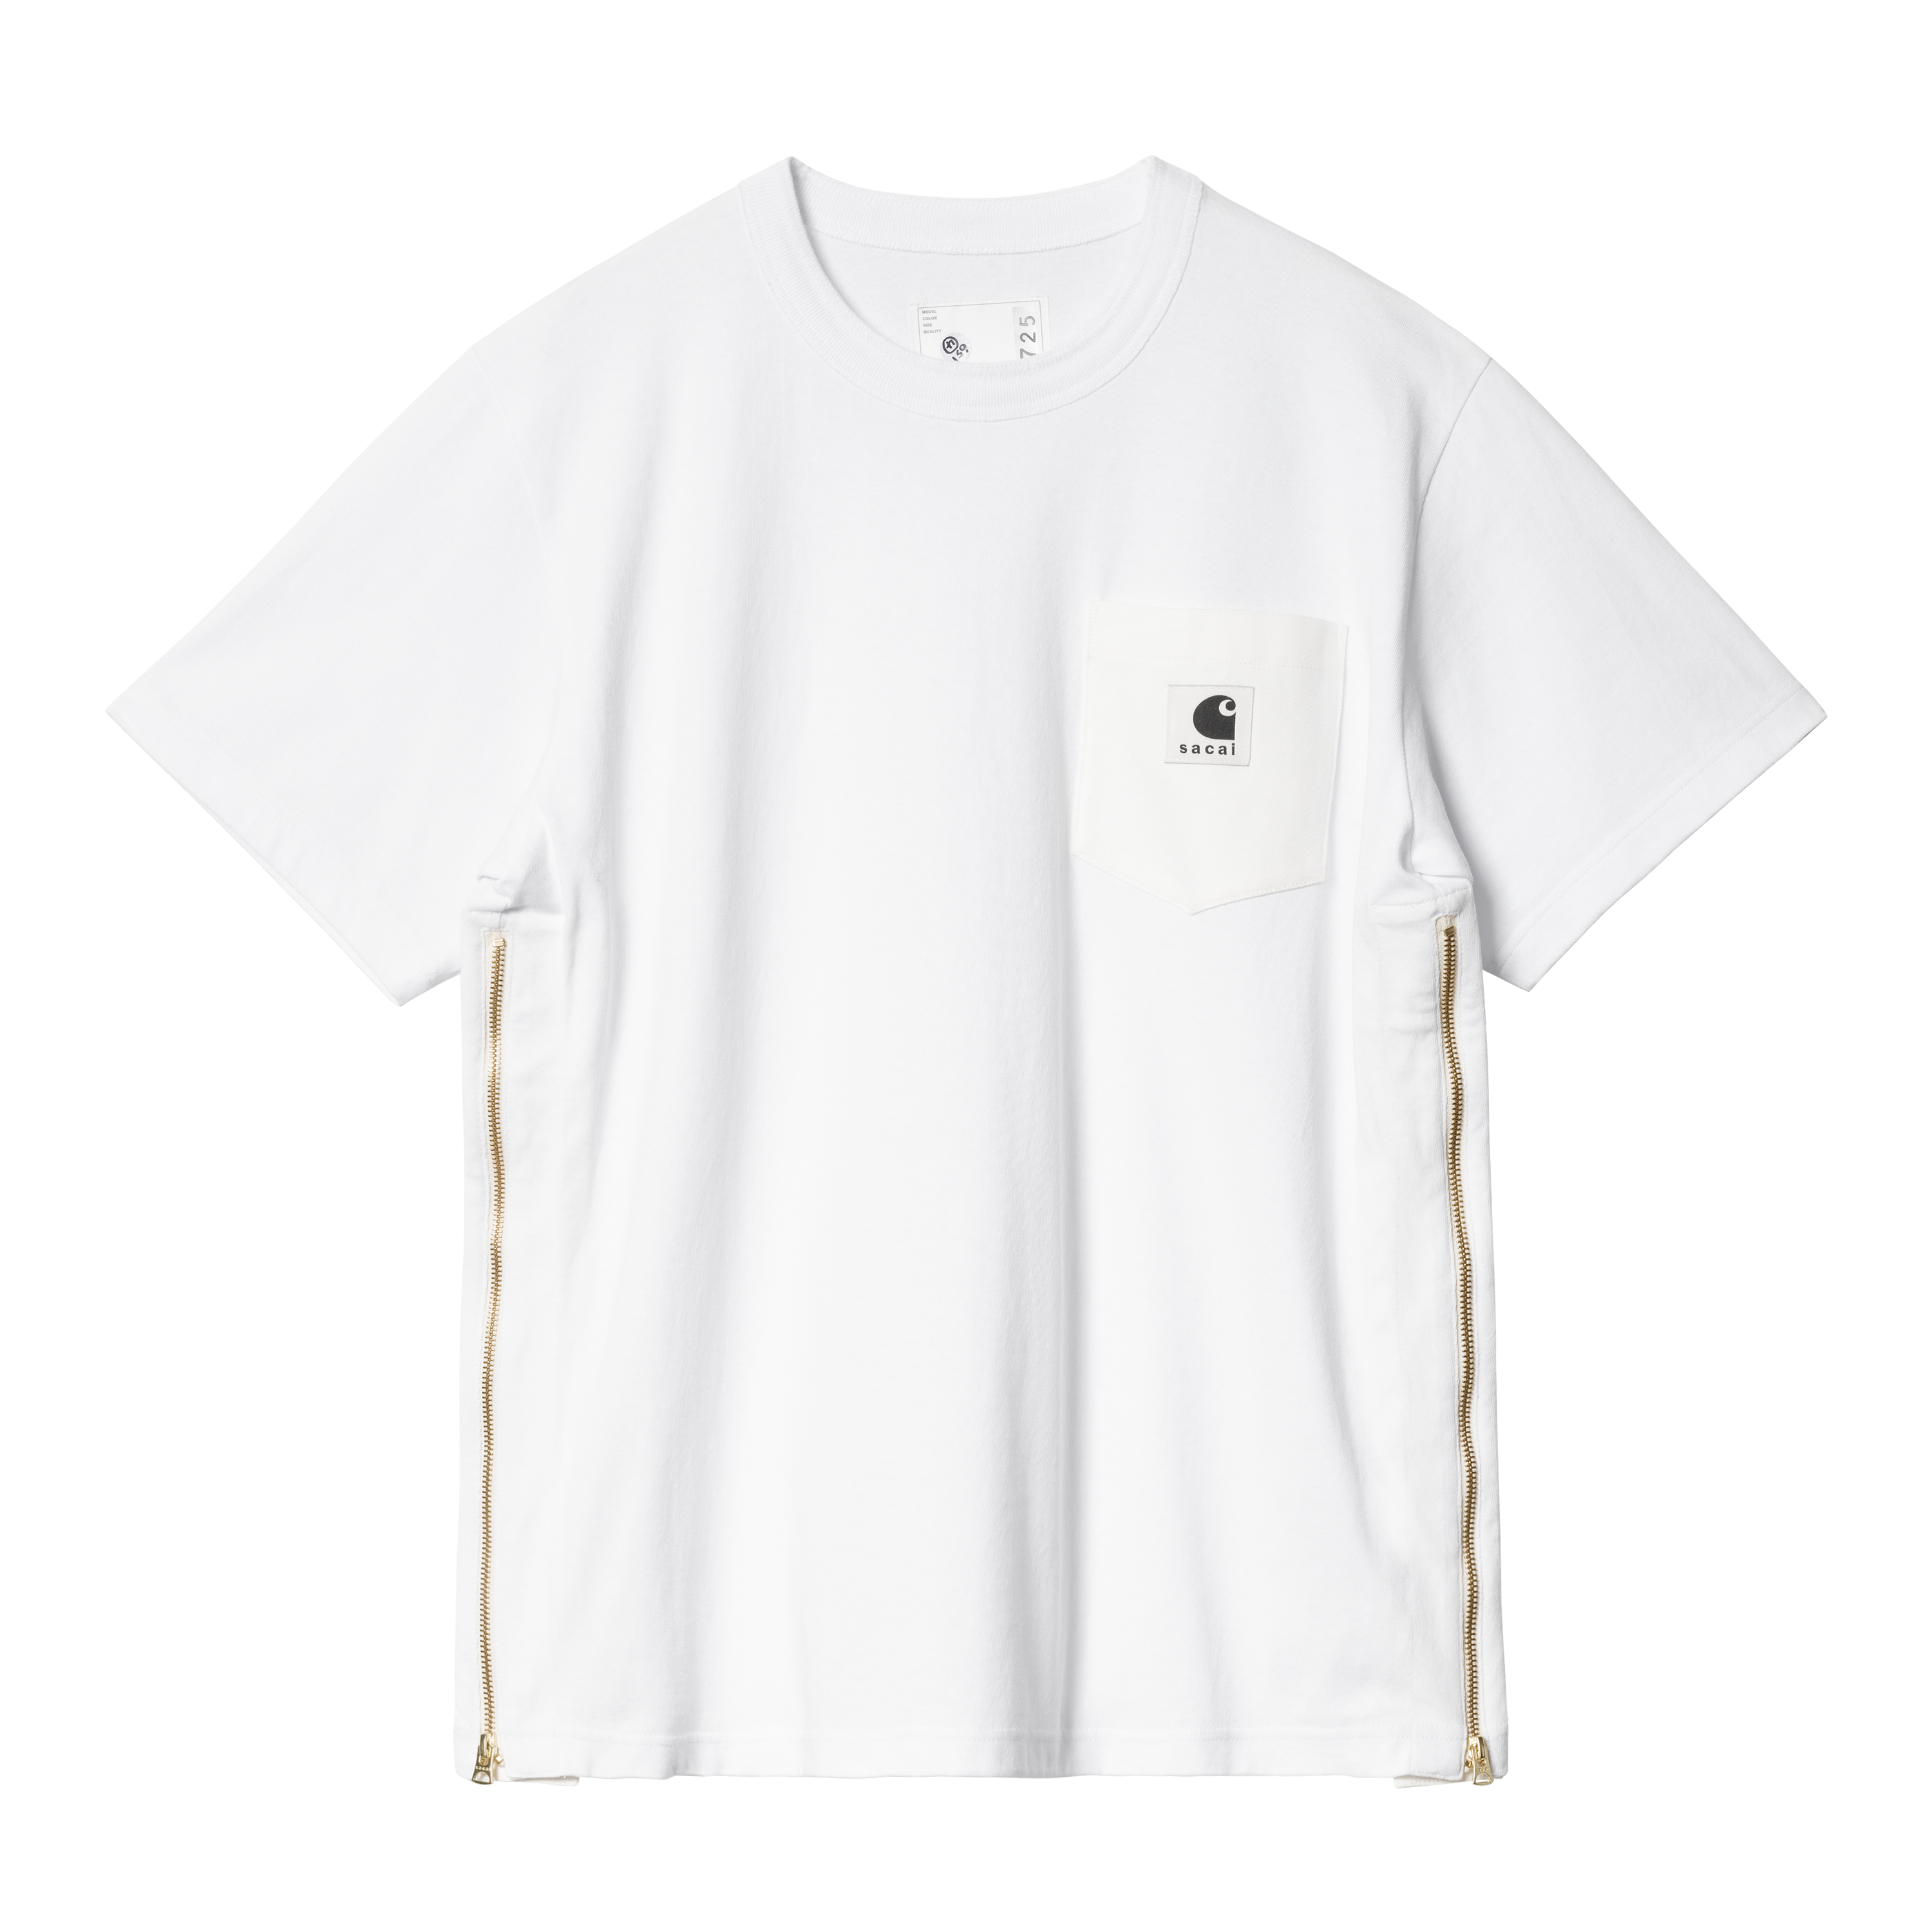 Carhartt WIP sacai x Carhartt WIP T-Shirt in Weiß